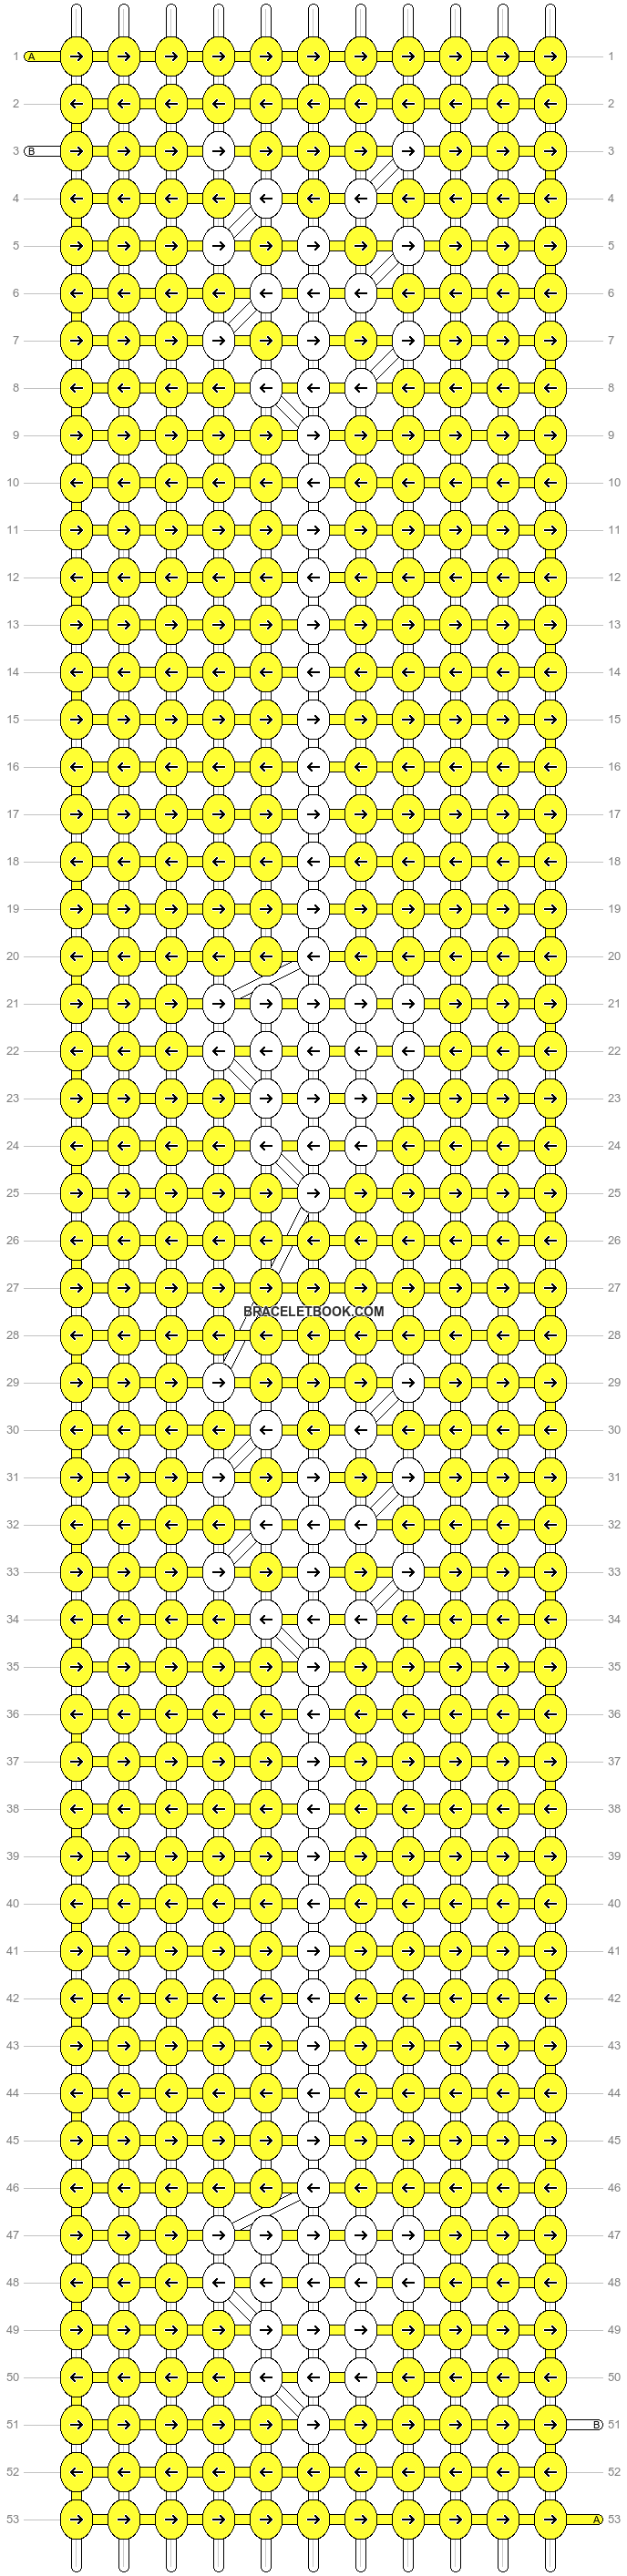 Alpha pattern #98375 variation #181190 pattern